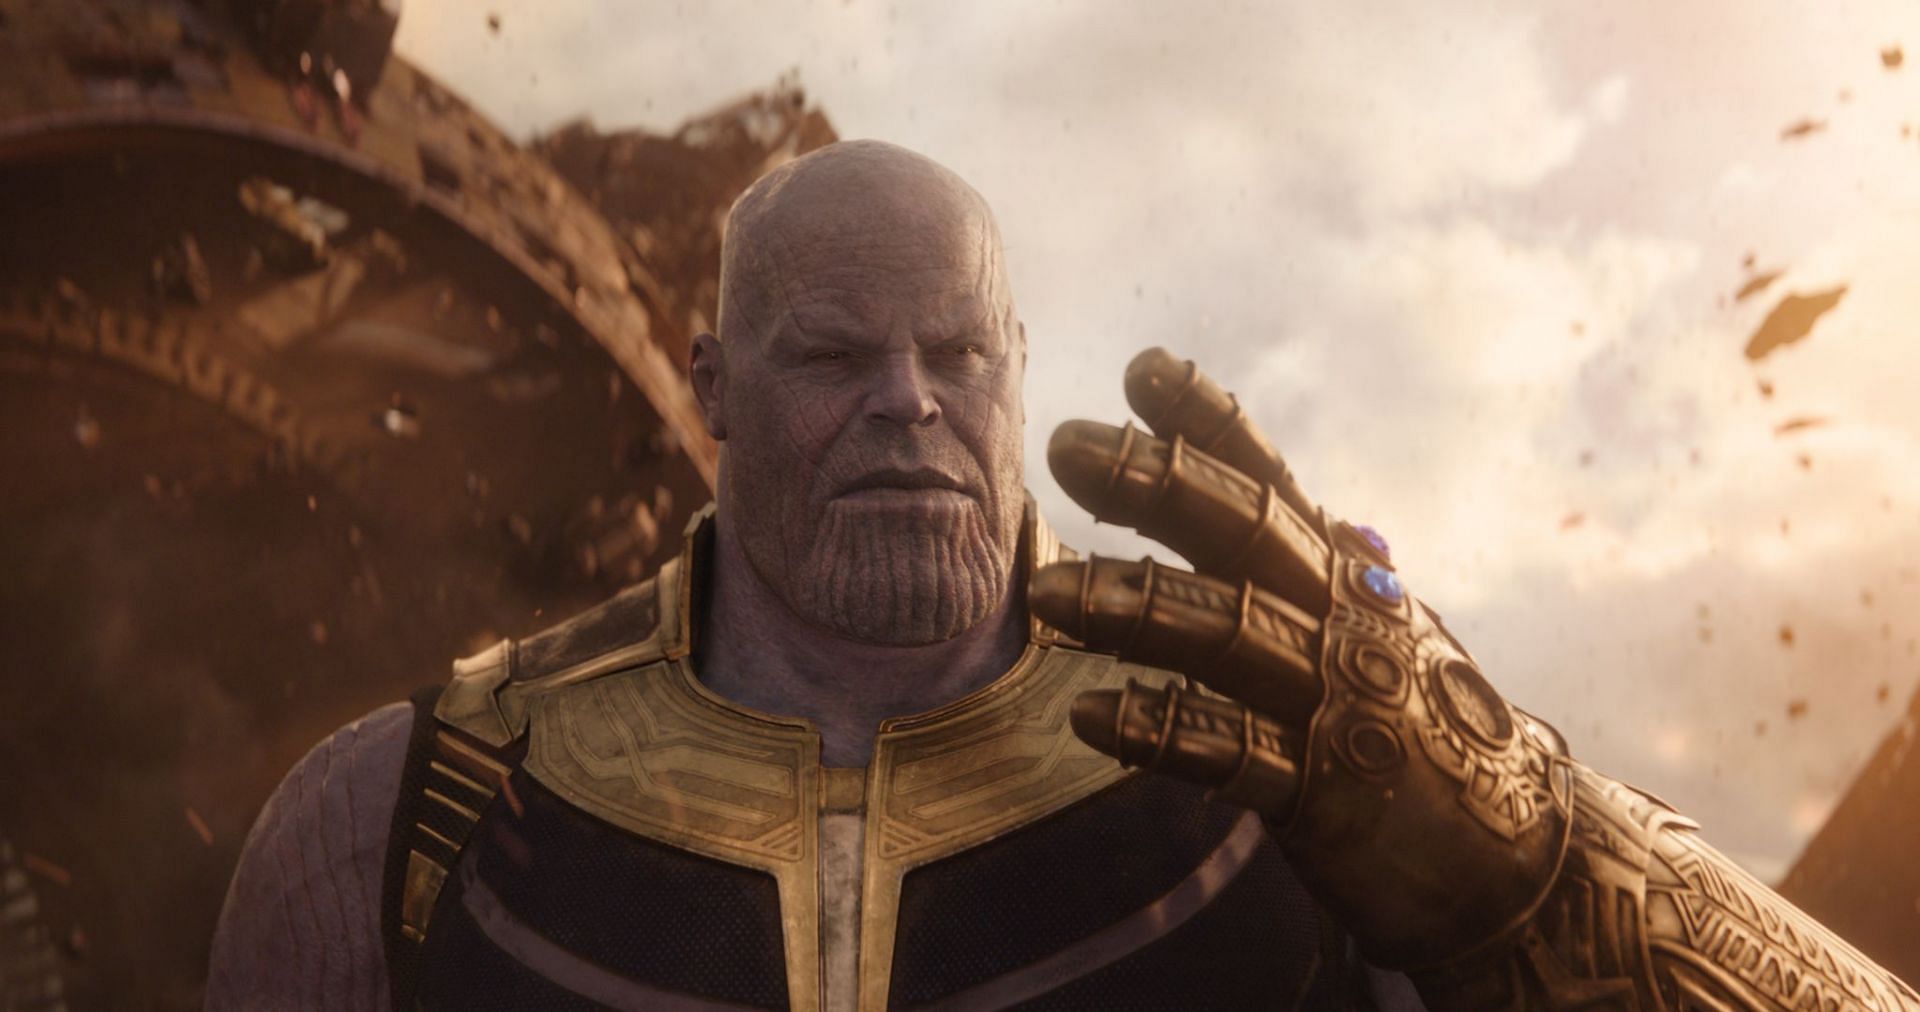 The Mad Titan, Thanos, seeks balance in the universe (Image via Marvel Studios)